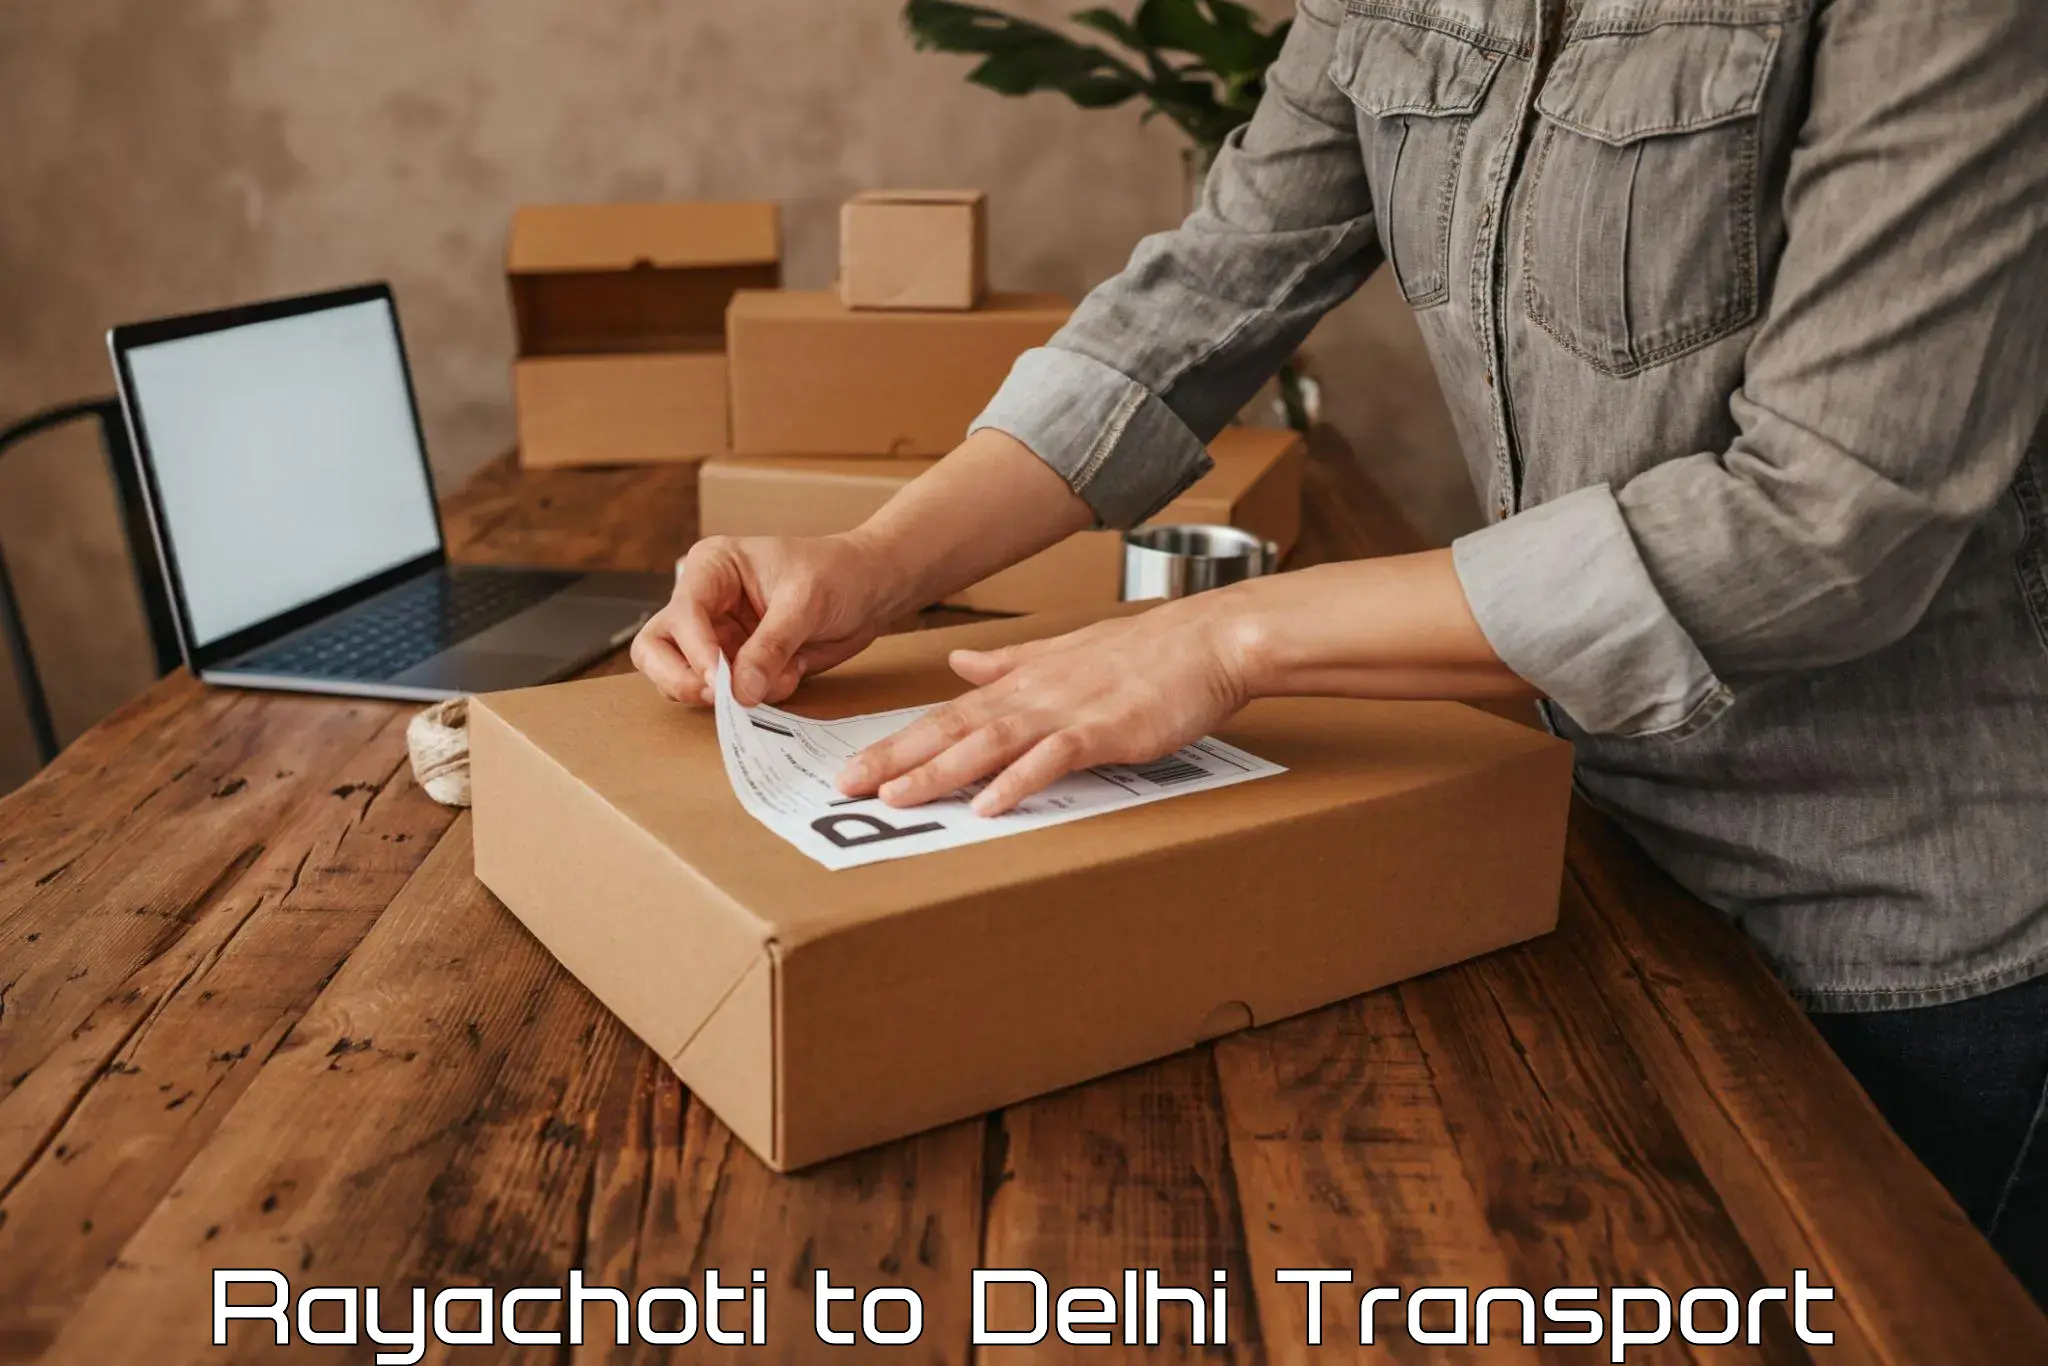 Daily transport service Rayachoti to Delhi